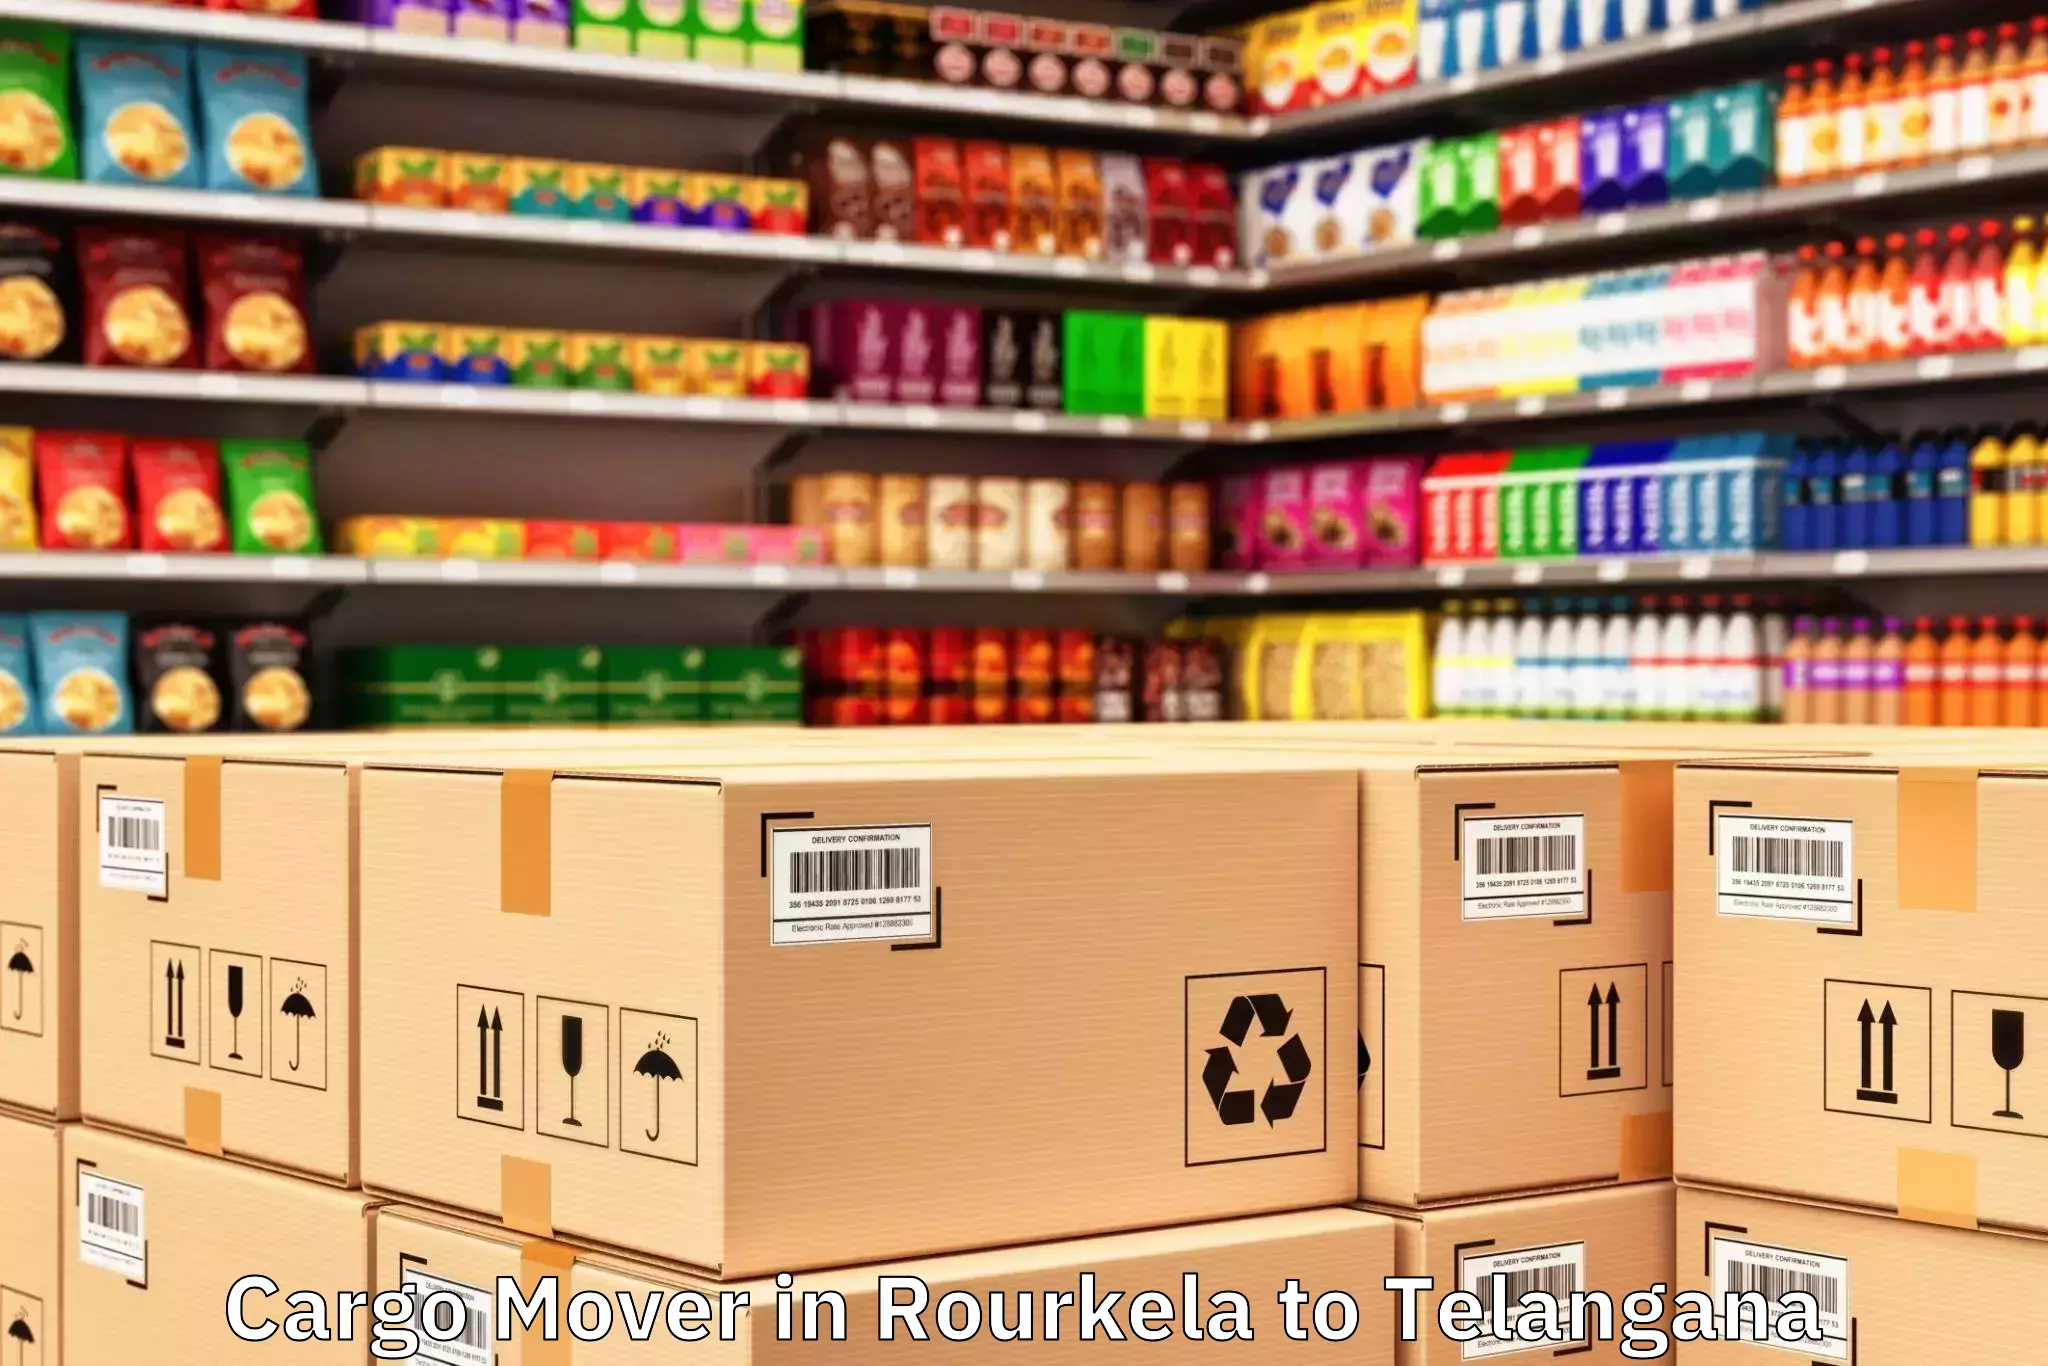 Reliable Rourkela to Mahbubnagar Cargo Mover